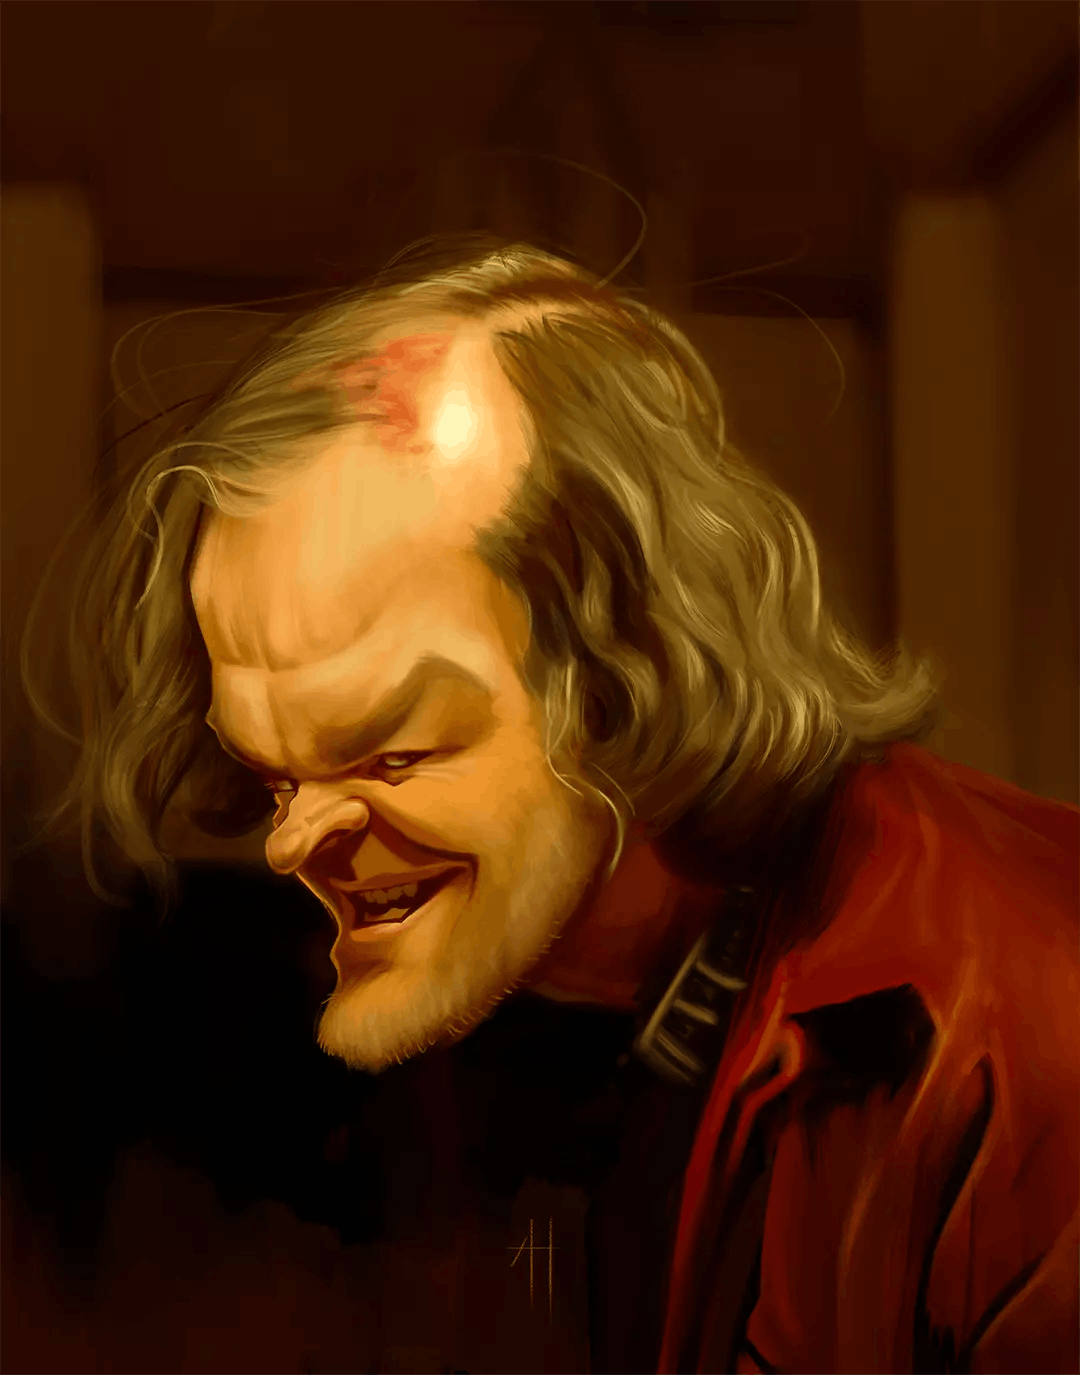 A caricature of Jack Nicholson